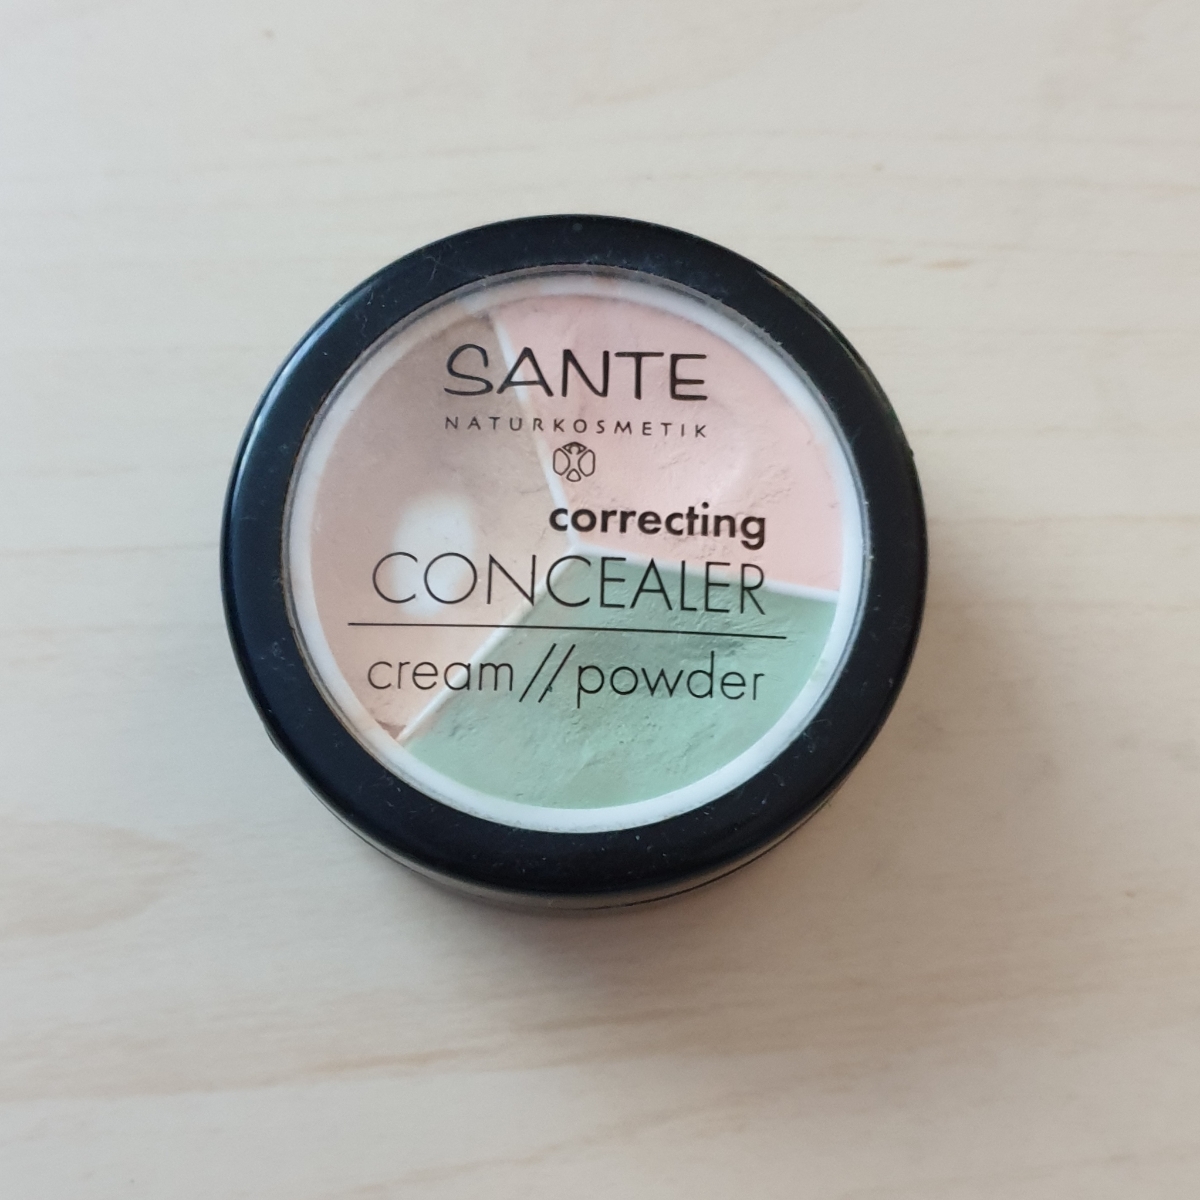 Sante Naturkosmetik Correcting concealer Review | abillion